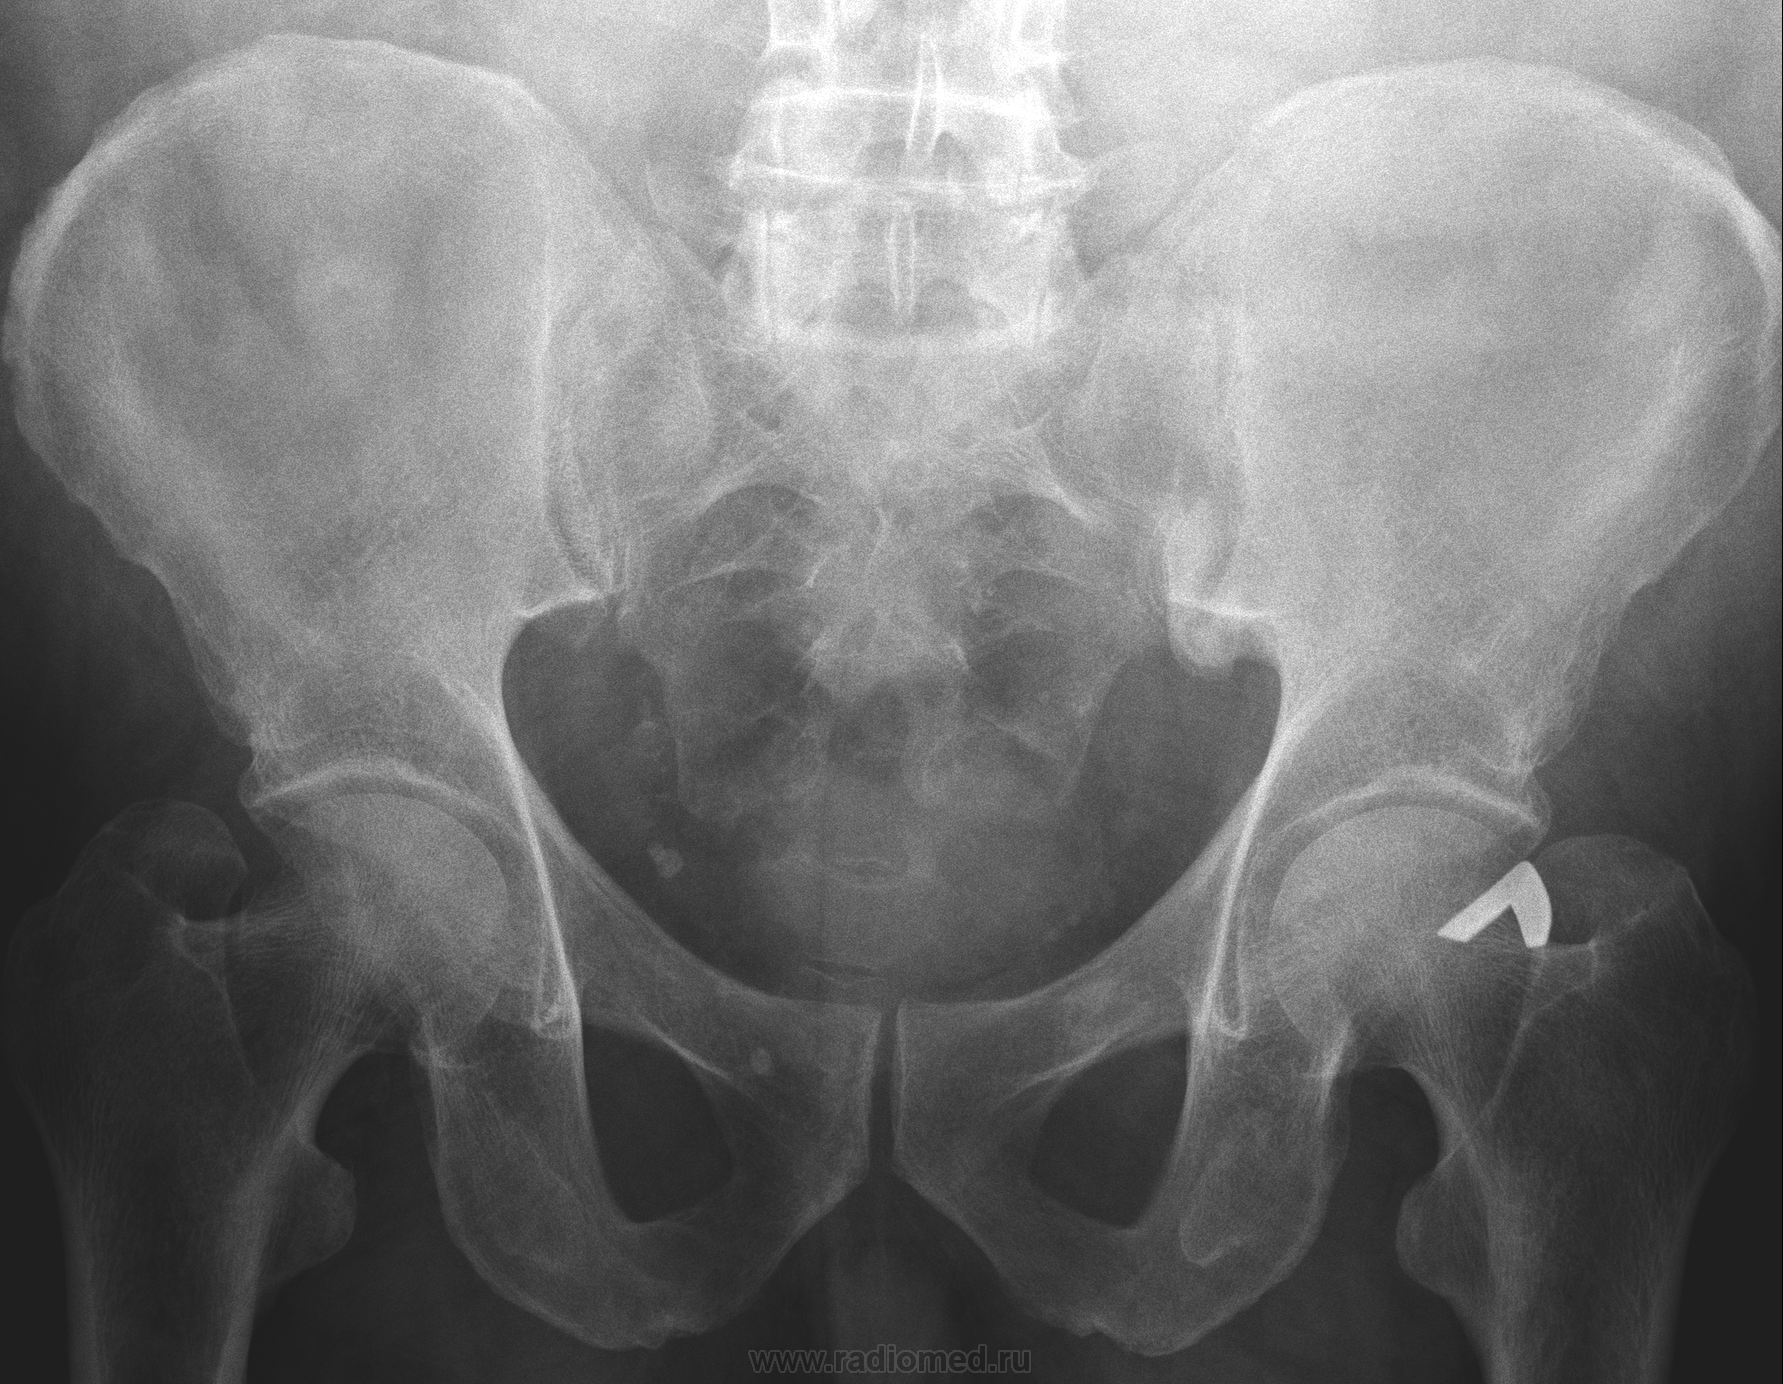 Рентген таза и позвоночника женщины